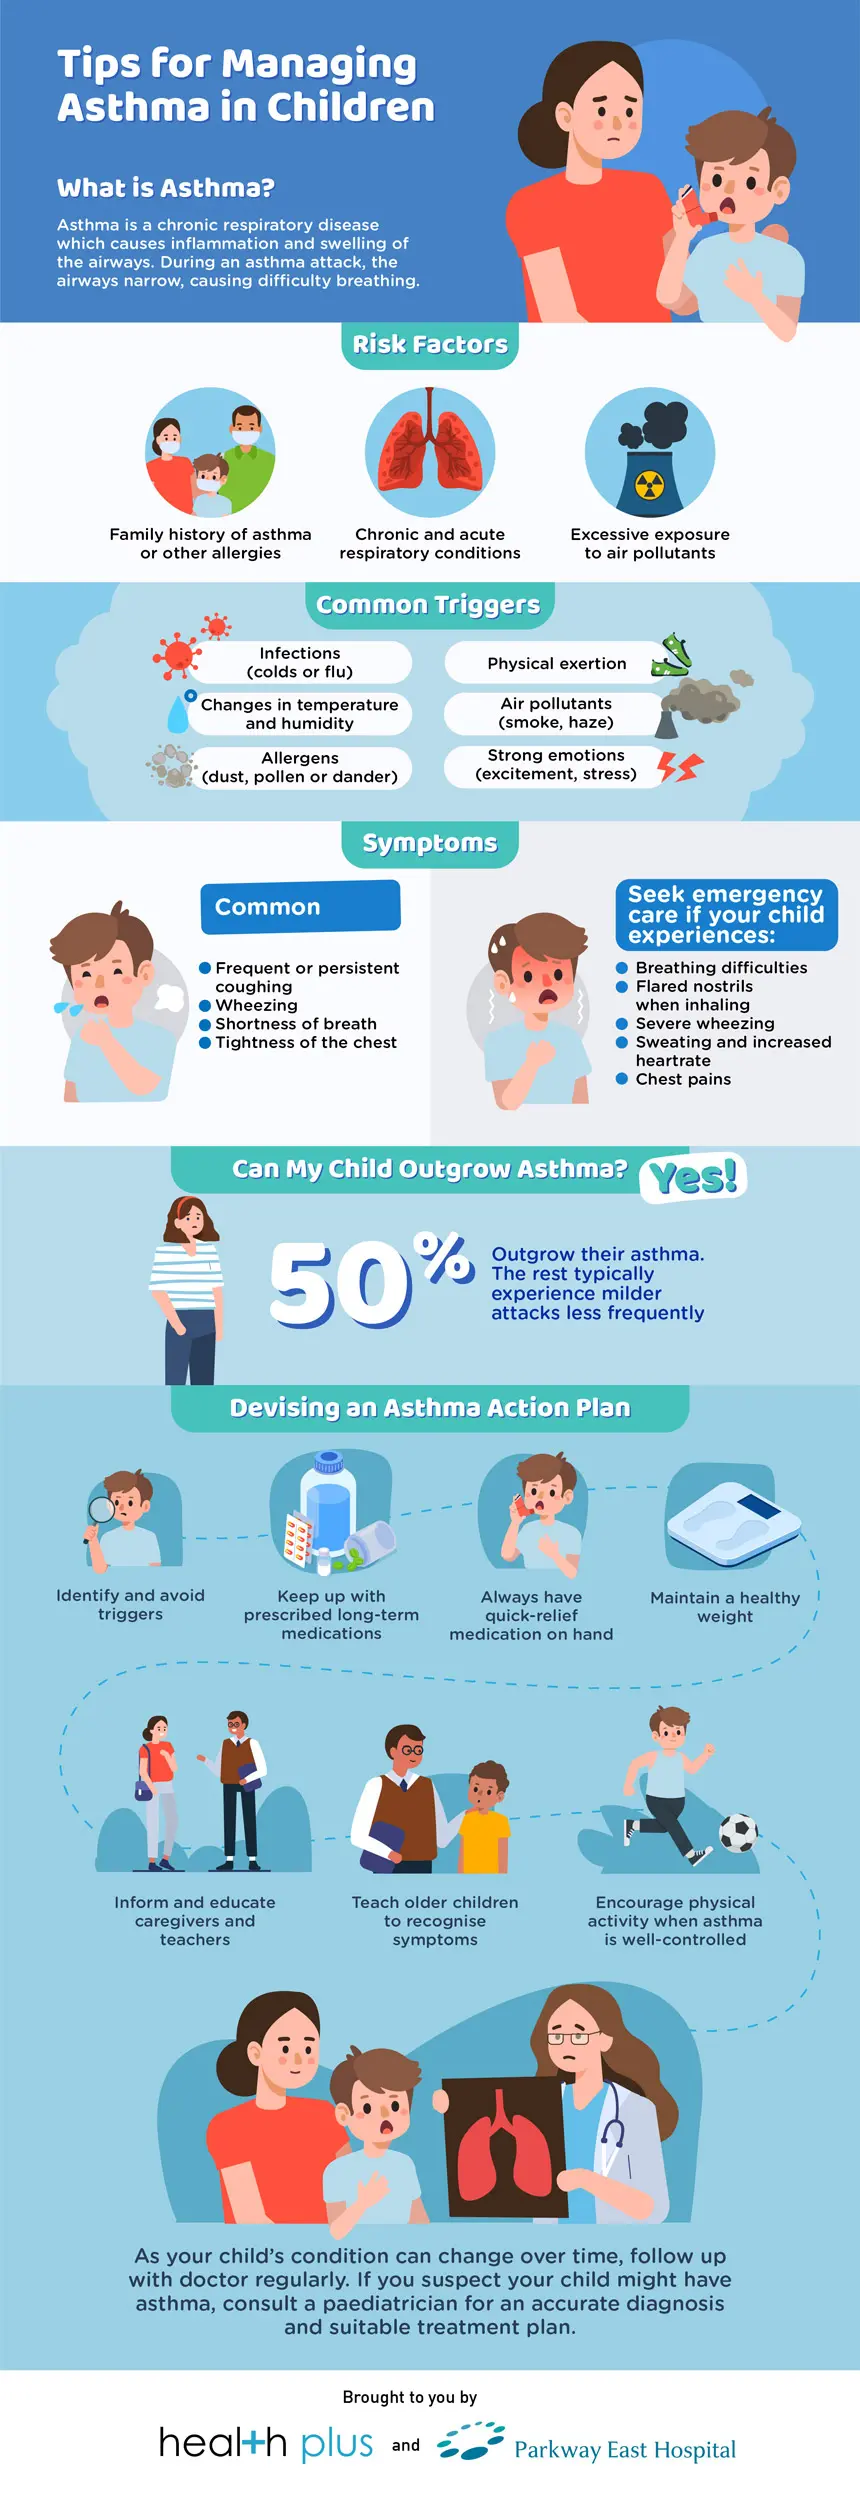 Childhood-asthma-action-plan-ig-d